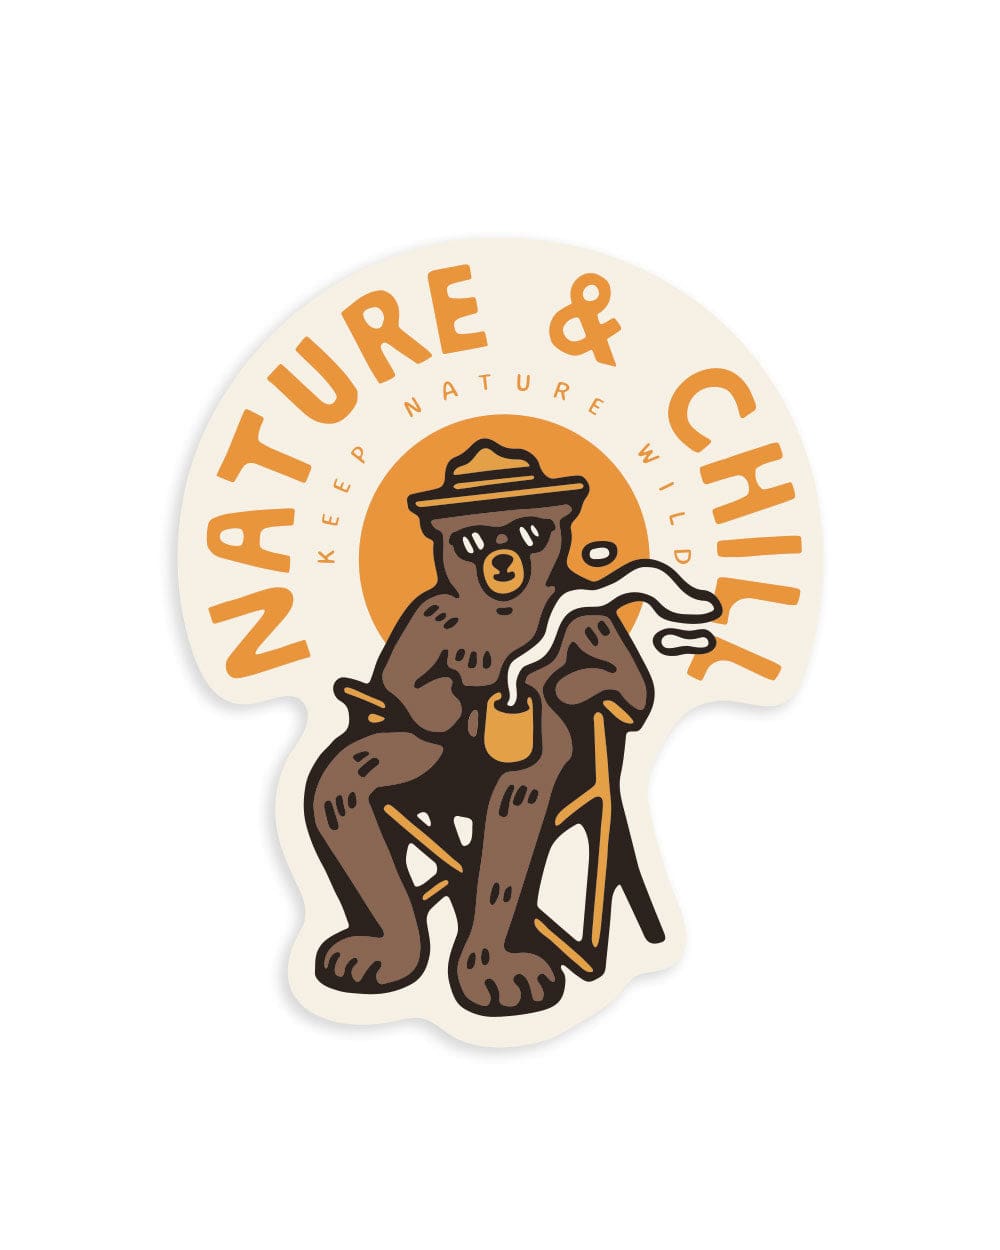 Keep Nature Wild Sticker Nature and Chill | Sticker